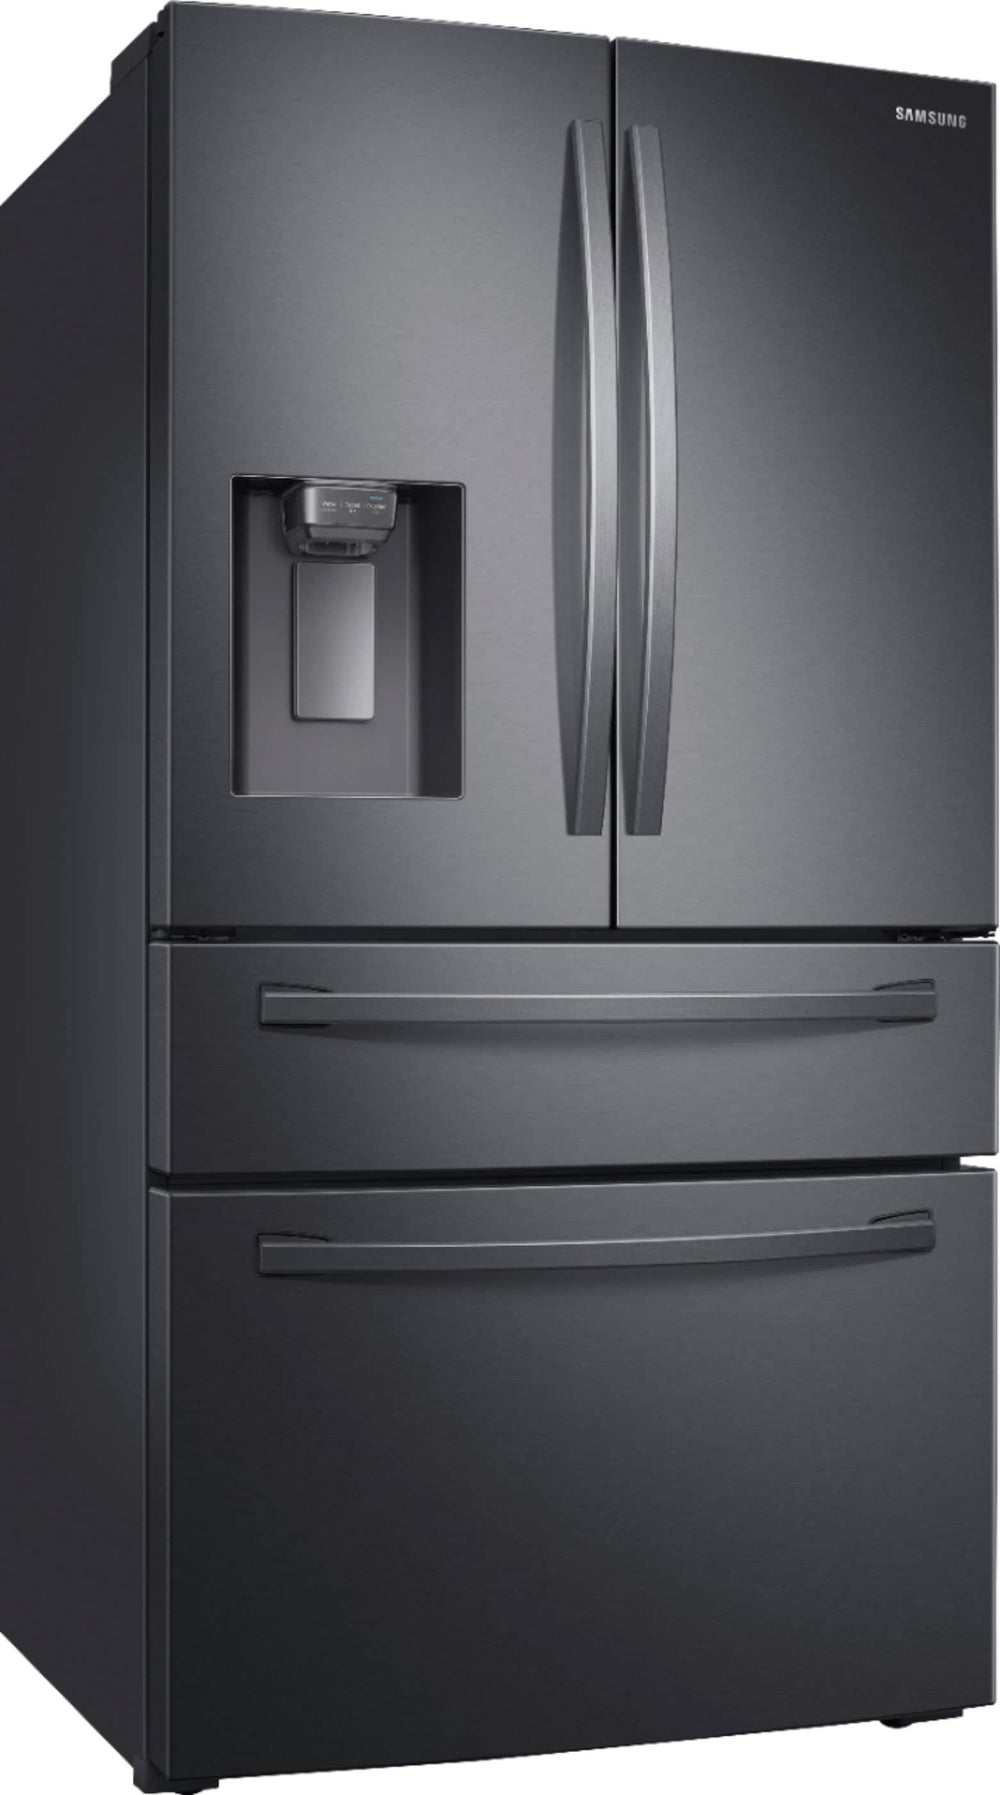 Samsung - 22.6 cu. ft. 4-Door French Door Counter Depth Refrigerator with FlexZone™ Drawer - Black stainless steel_1